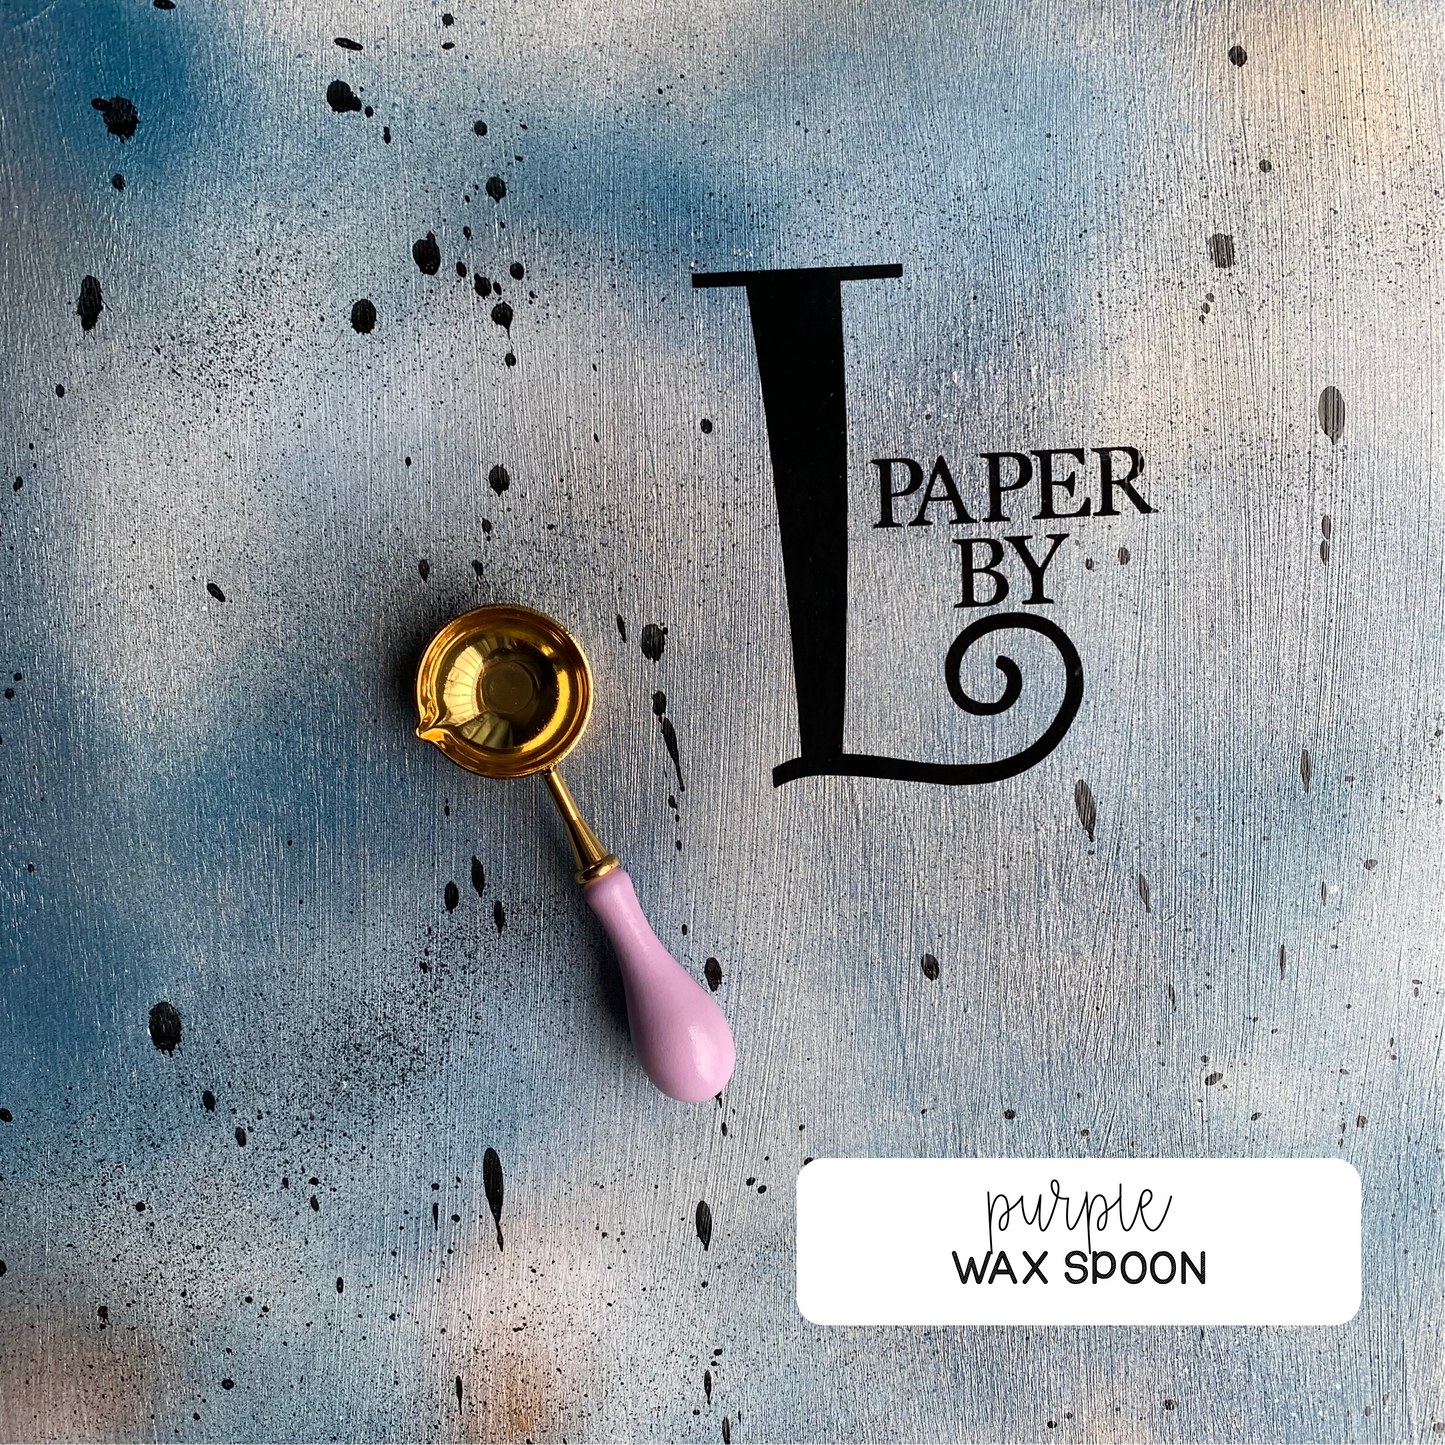 Wax Spoon - Paper by L